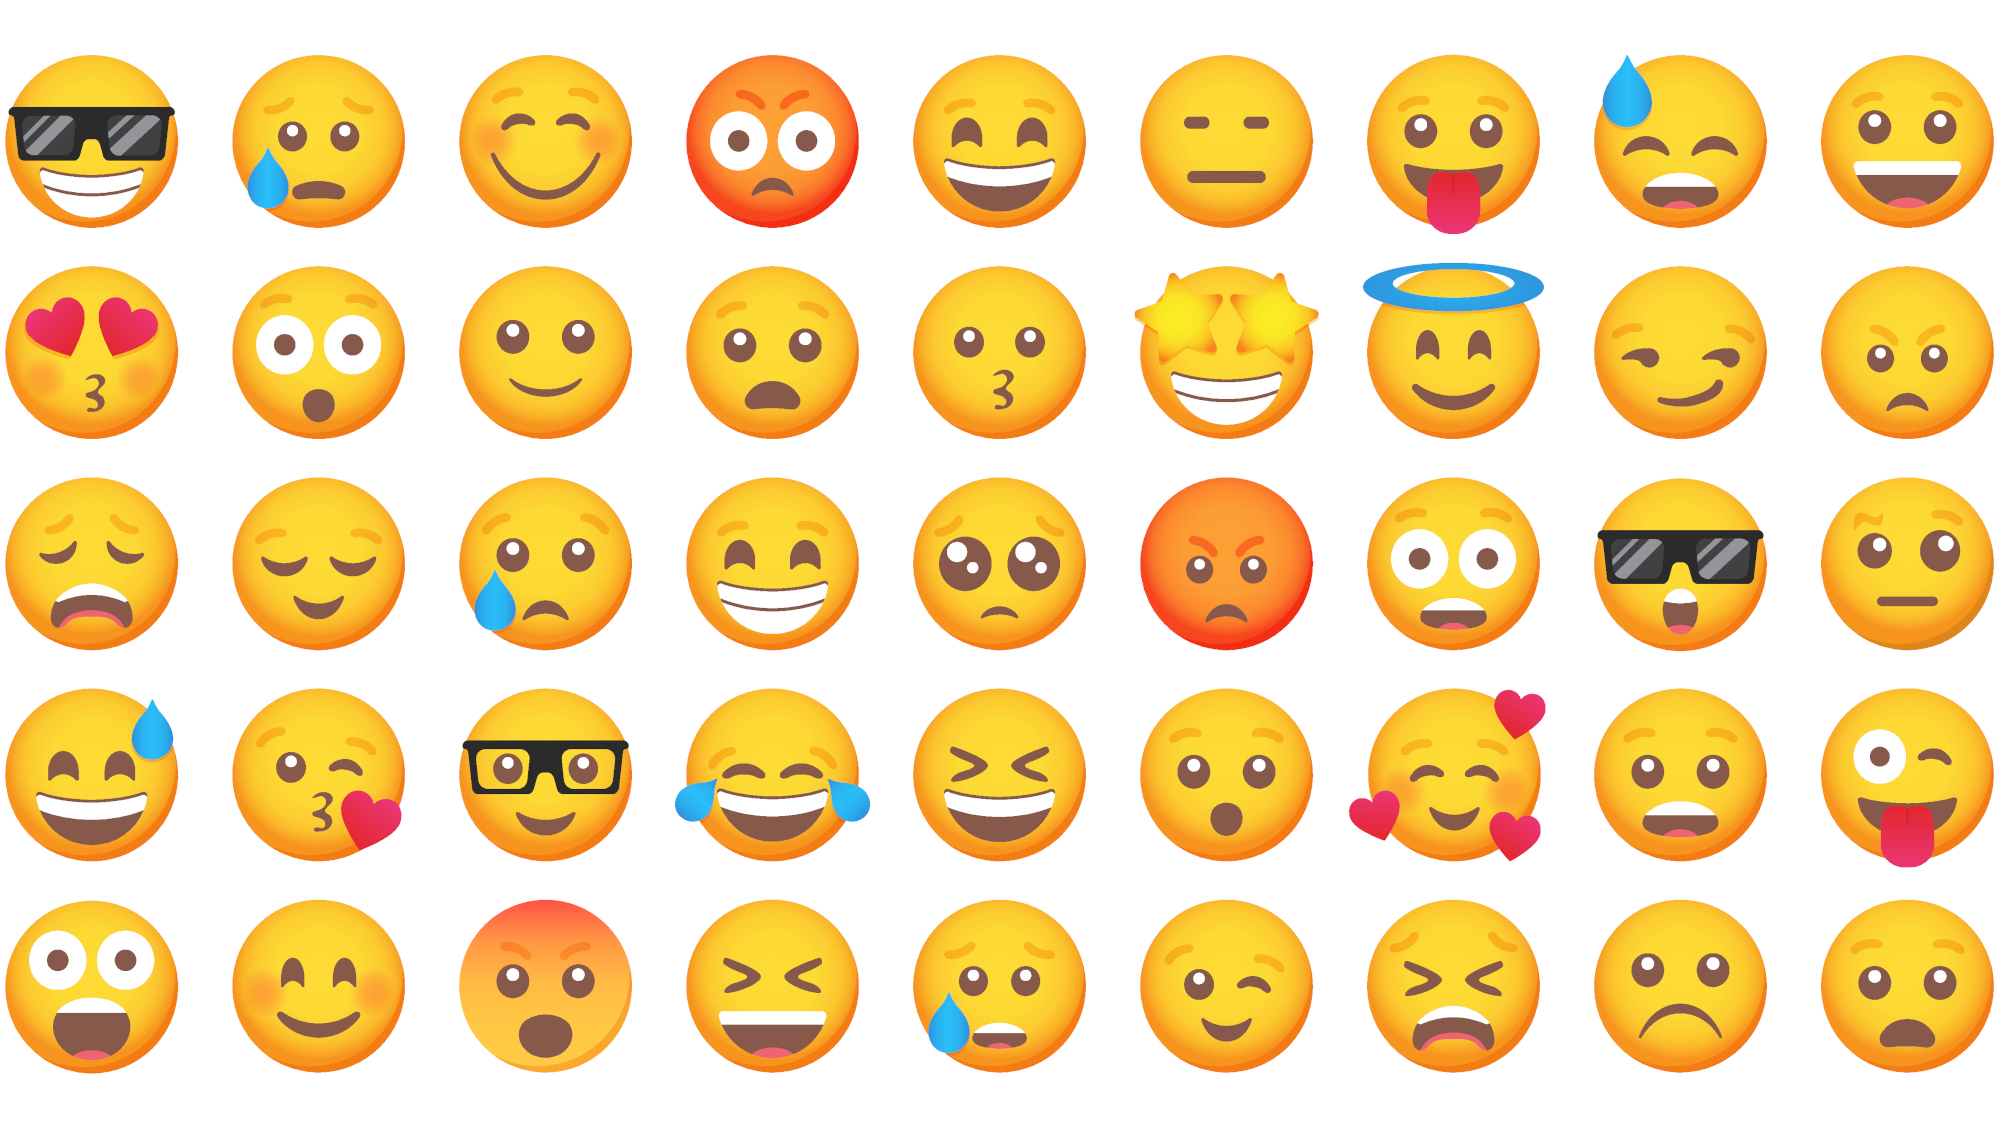 Total 95+ imagen emojis google sheets - Viaterra.mx